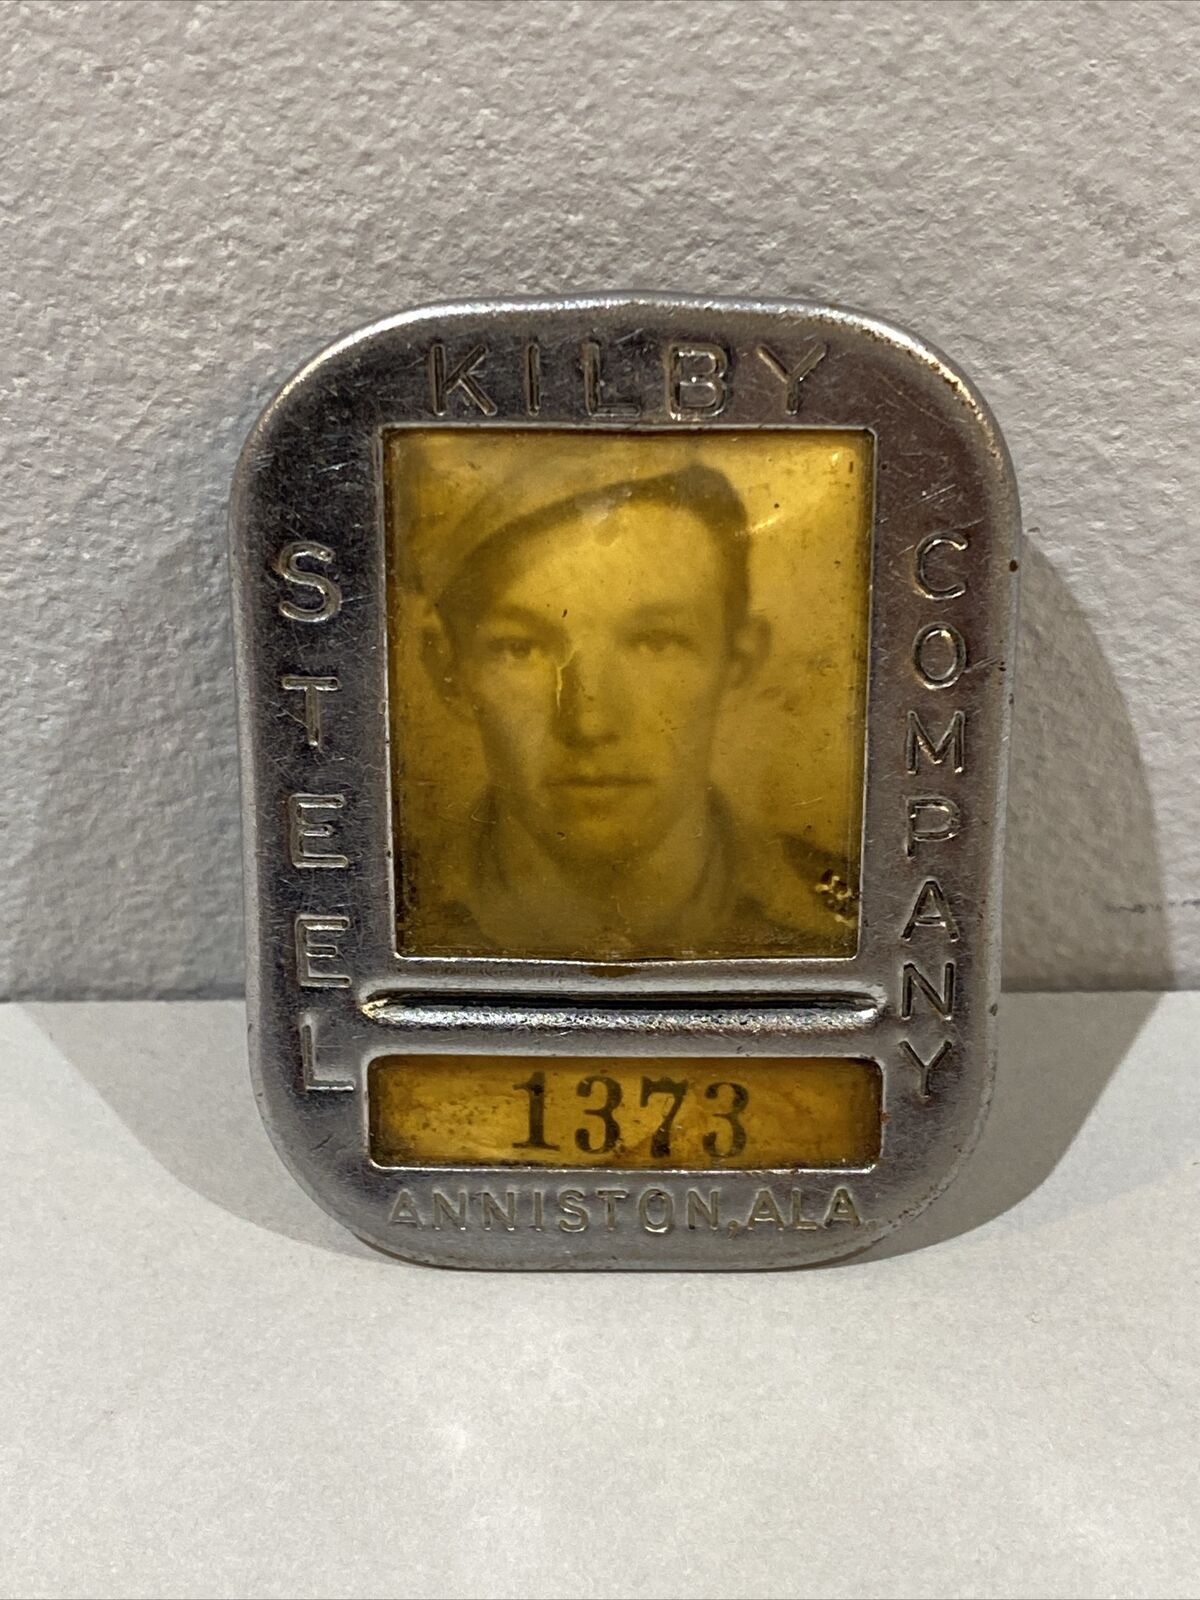 Vintage 1930s-40s Employee Metal Photo ID Badge Pin KILBEY STEEL CO Anniston, AL